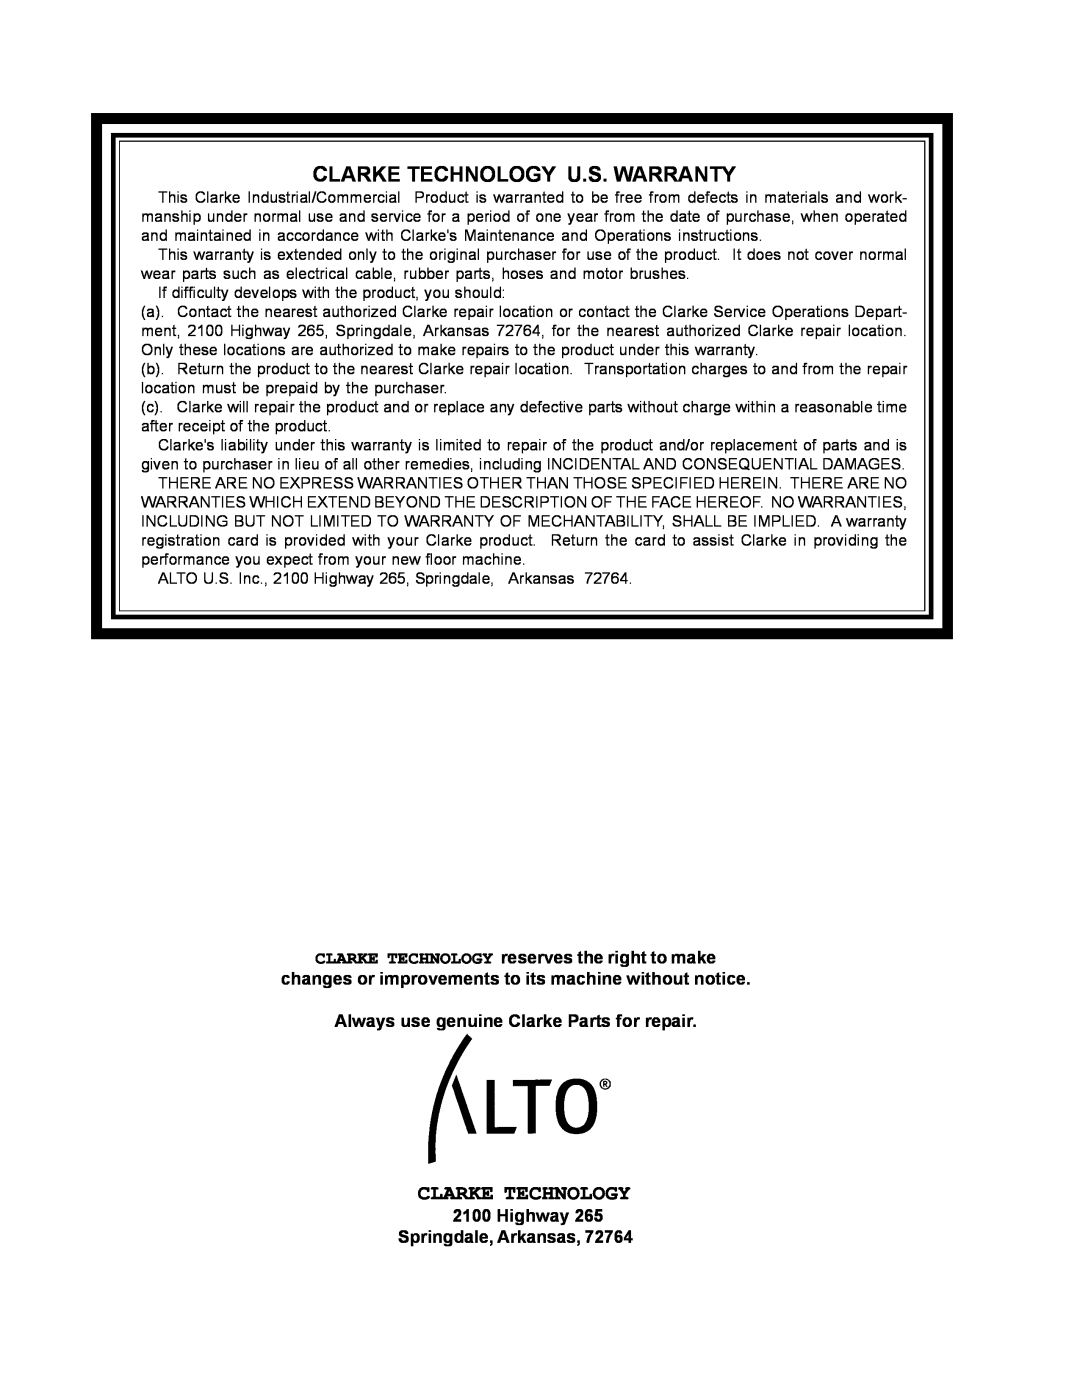 Nilfisk-ALTO S12cc, S16 manual Clarke Technology U.S. Warranty, CLARKE TECHNOLOGY reserves the right to make 